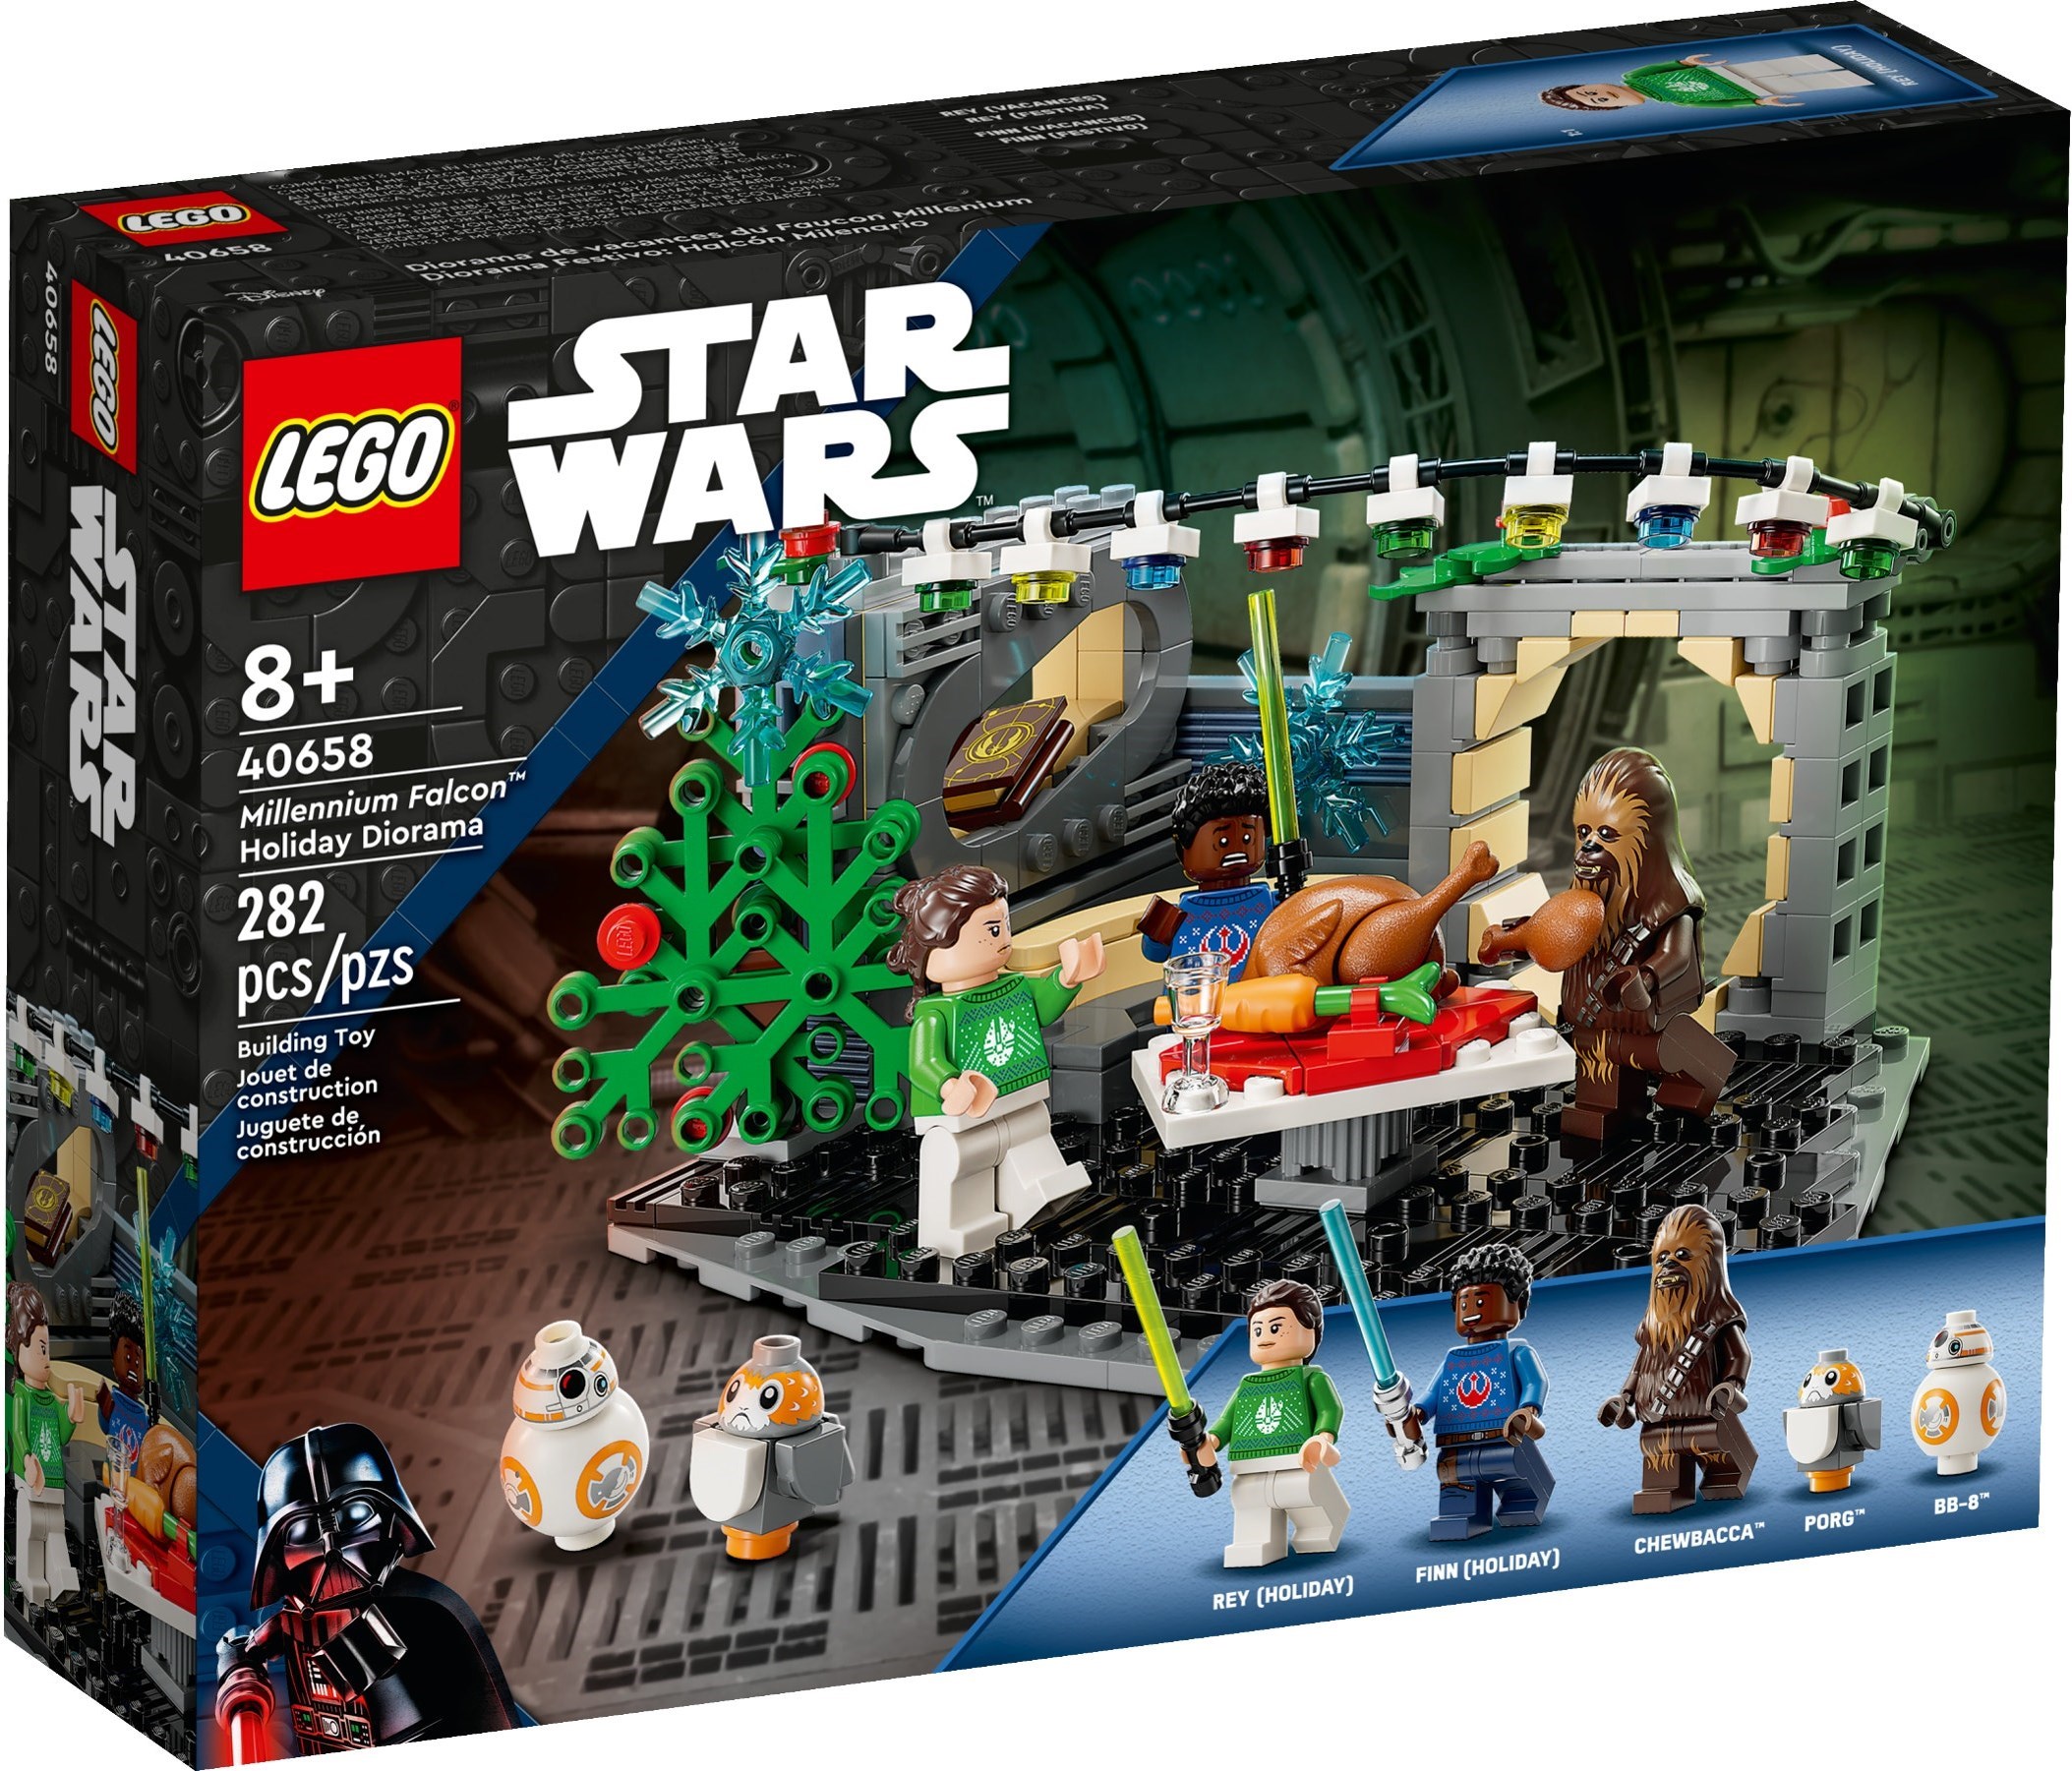 LEGO Star Wars Millennium Falcon Holiday Diorama (40658) Revealed The